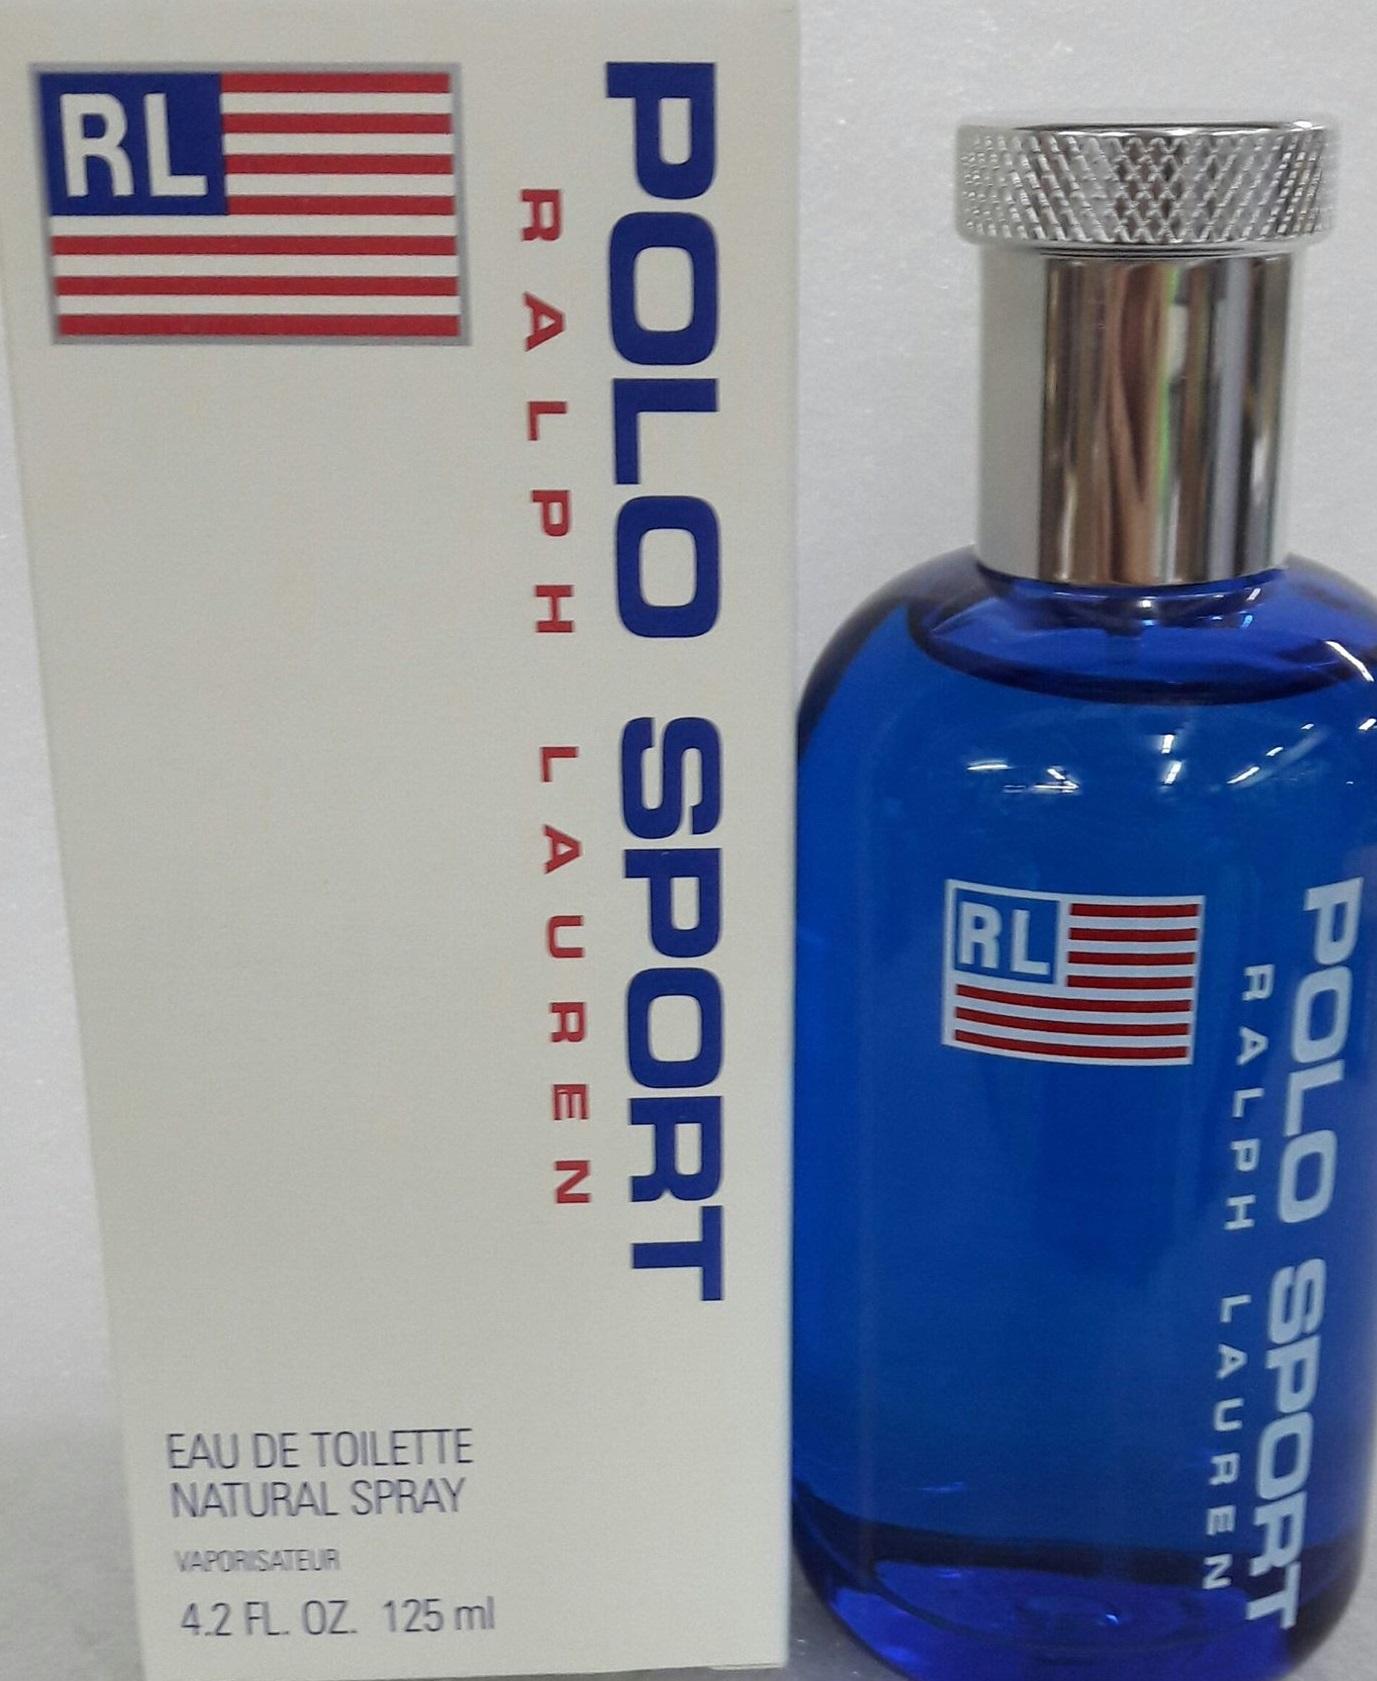 polo sport perfume review